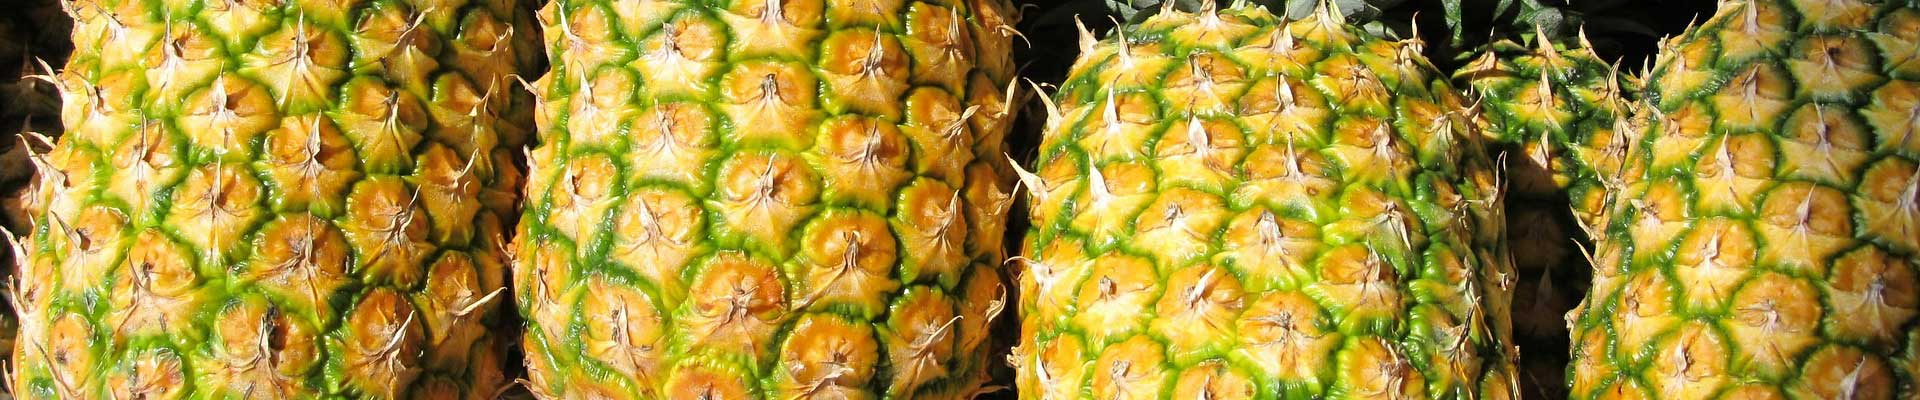 Pineapple farm investment